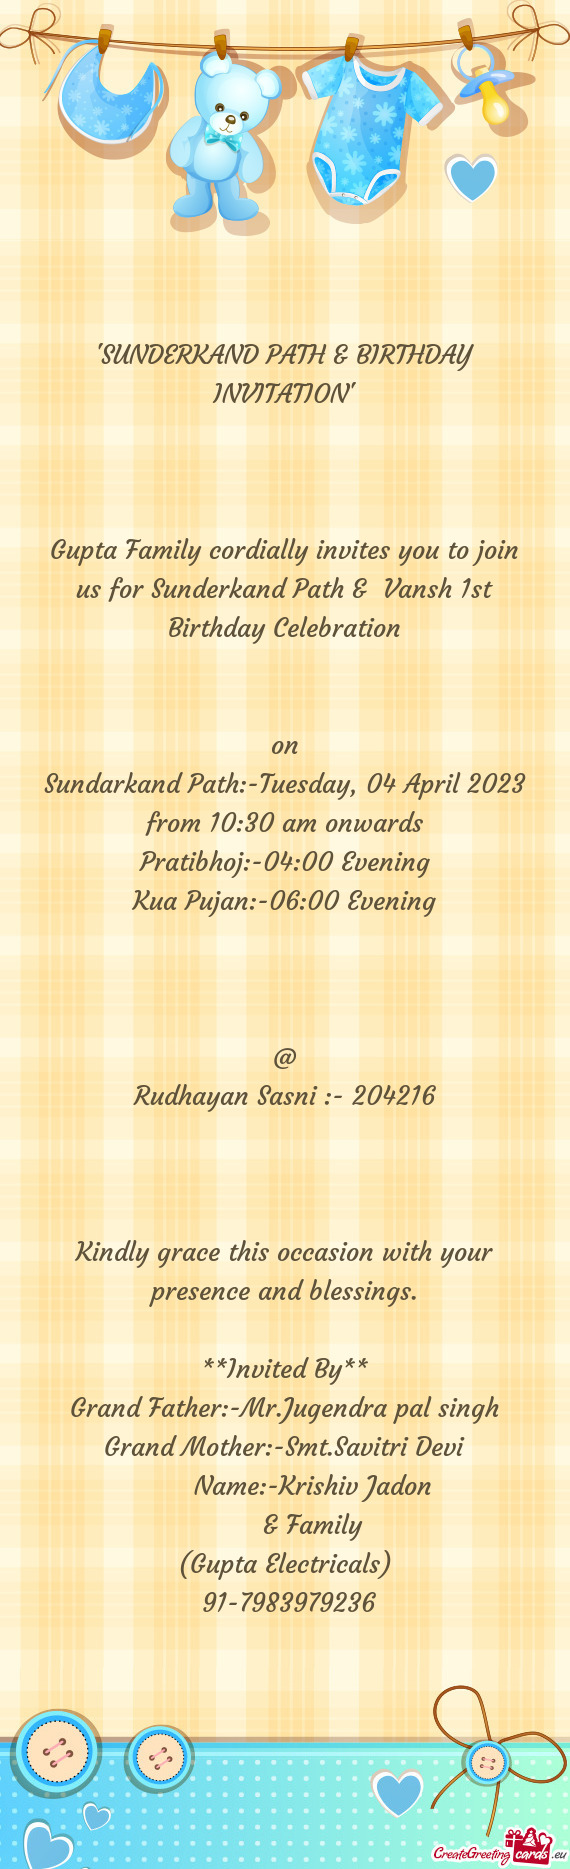 Gupta Family cordially invites you to join us for Sunderkand Path & Vansh 1st Birthday Celebration